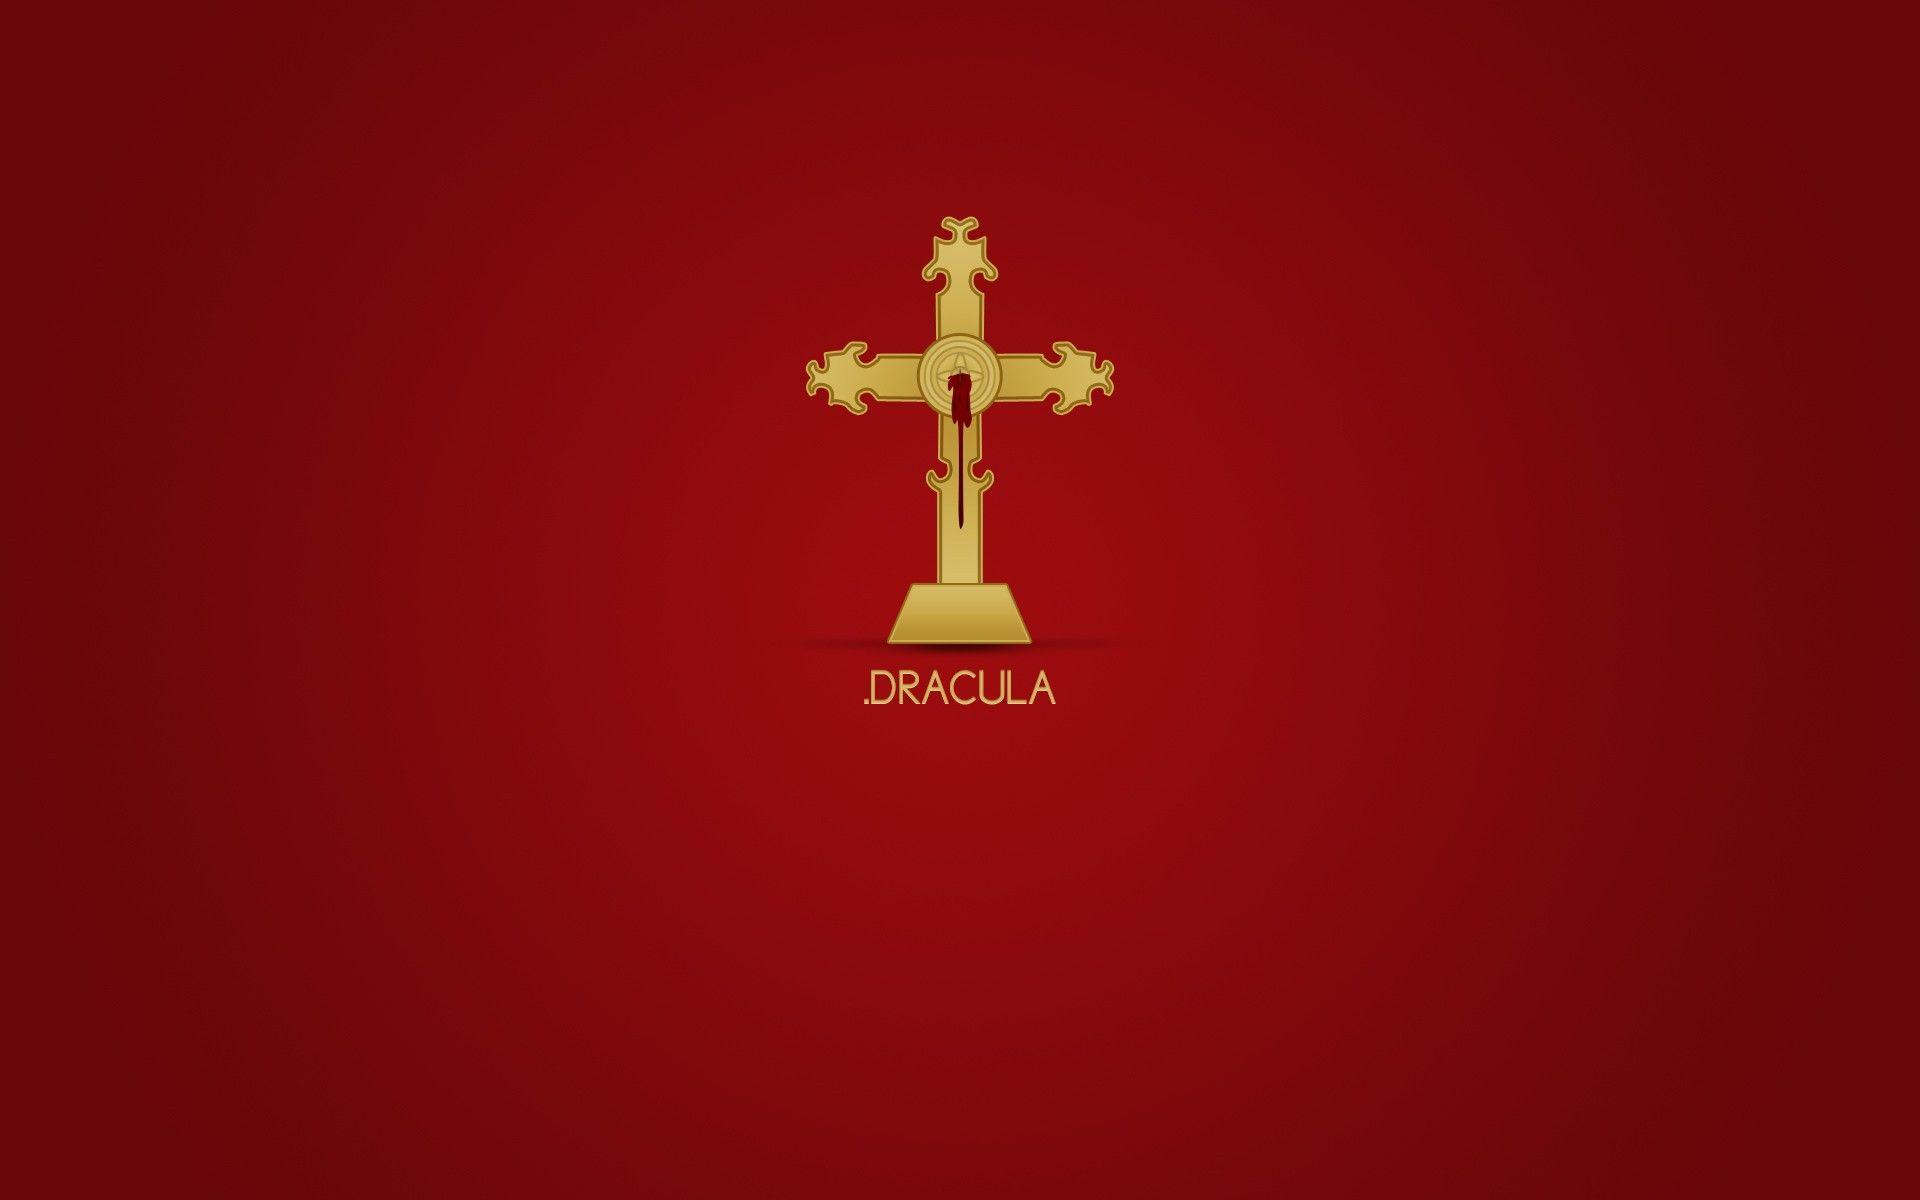 Download the Dracula Cross Wallpaper, Dracula Cross iPhone